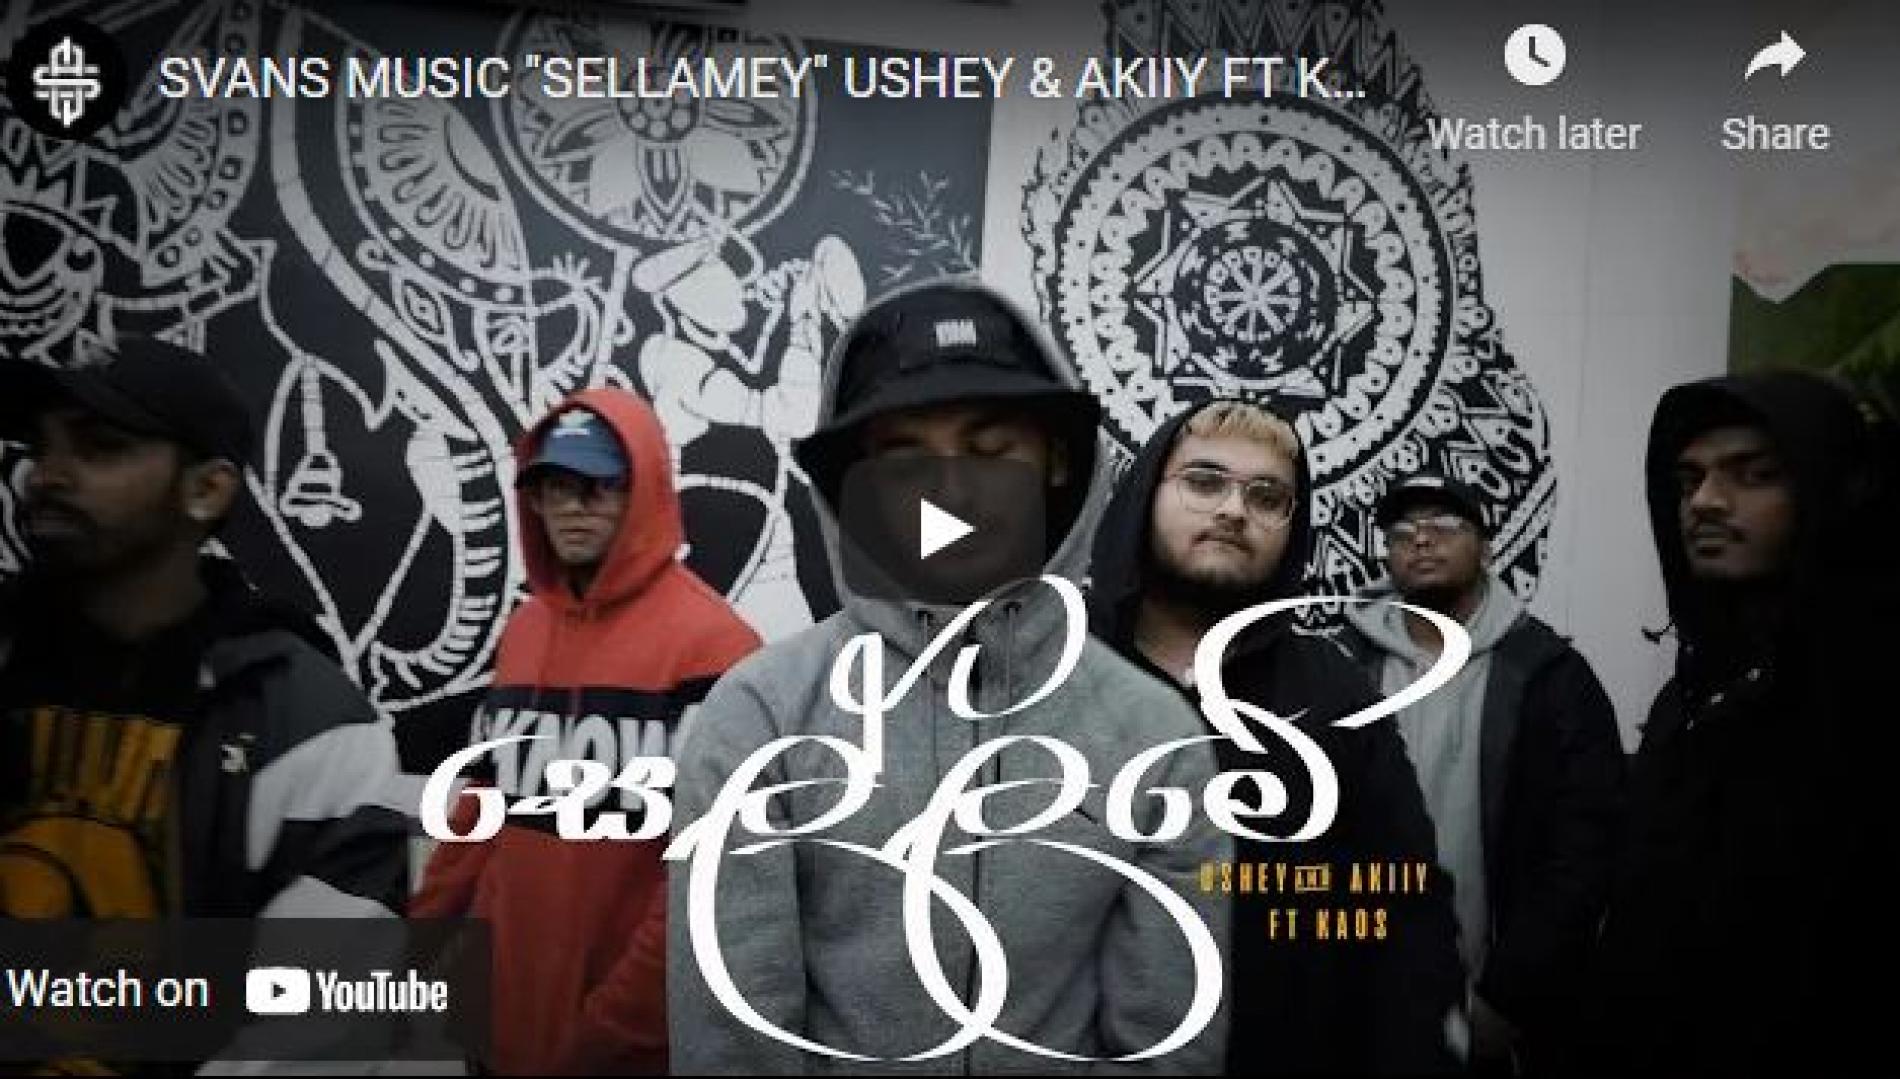 New Music : Svans Music “Sellamey” Ushey & Akiiy Ft Kaos